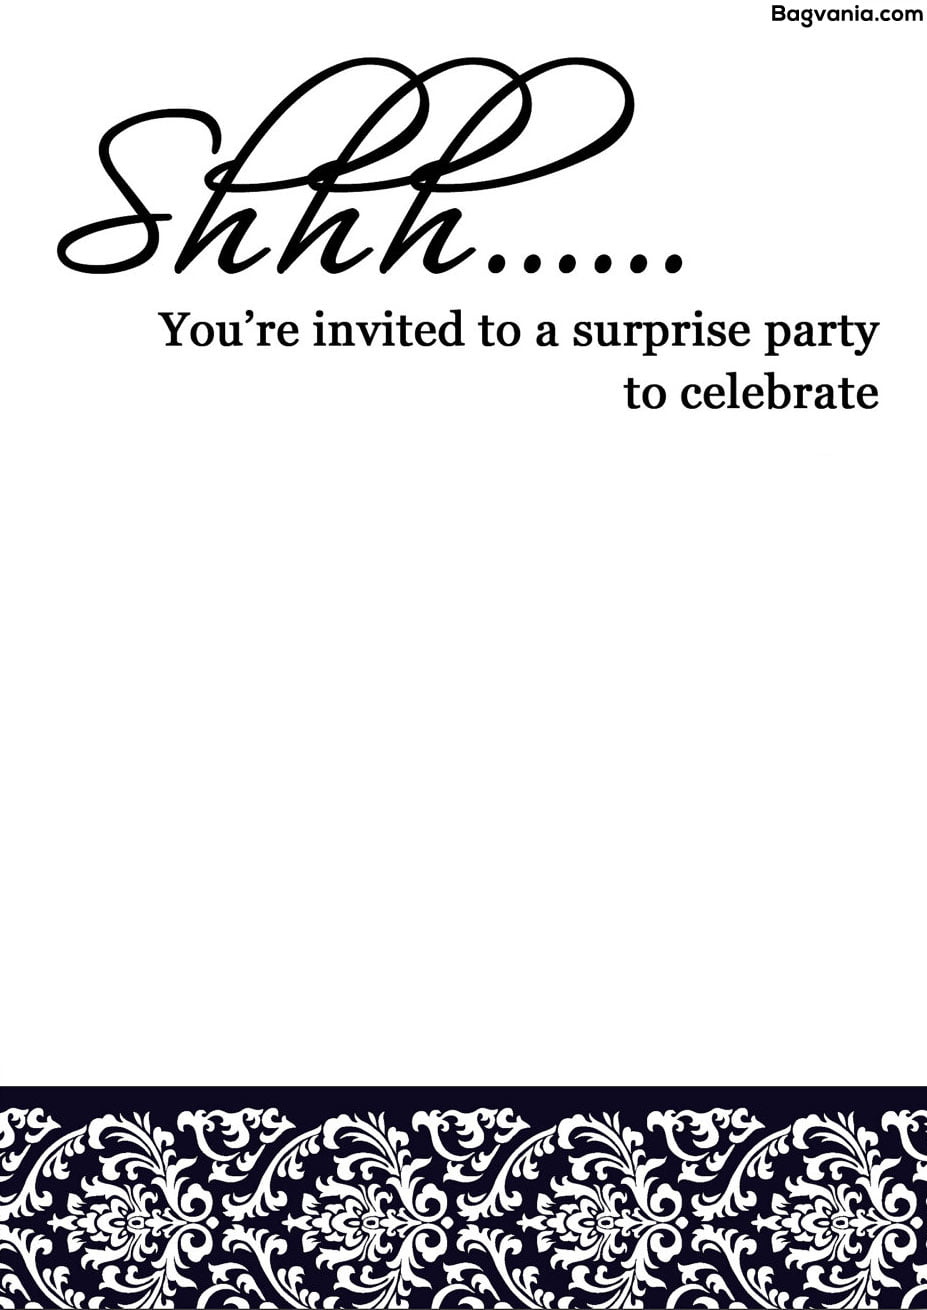 free-printable-surprise-birthday-invitations-bagvania-free-printable